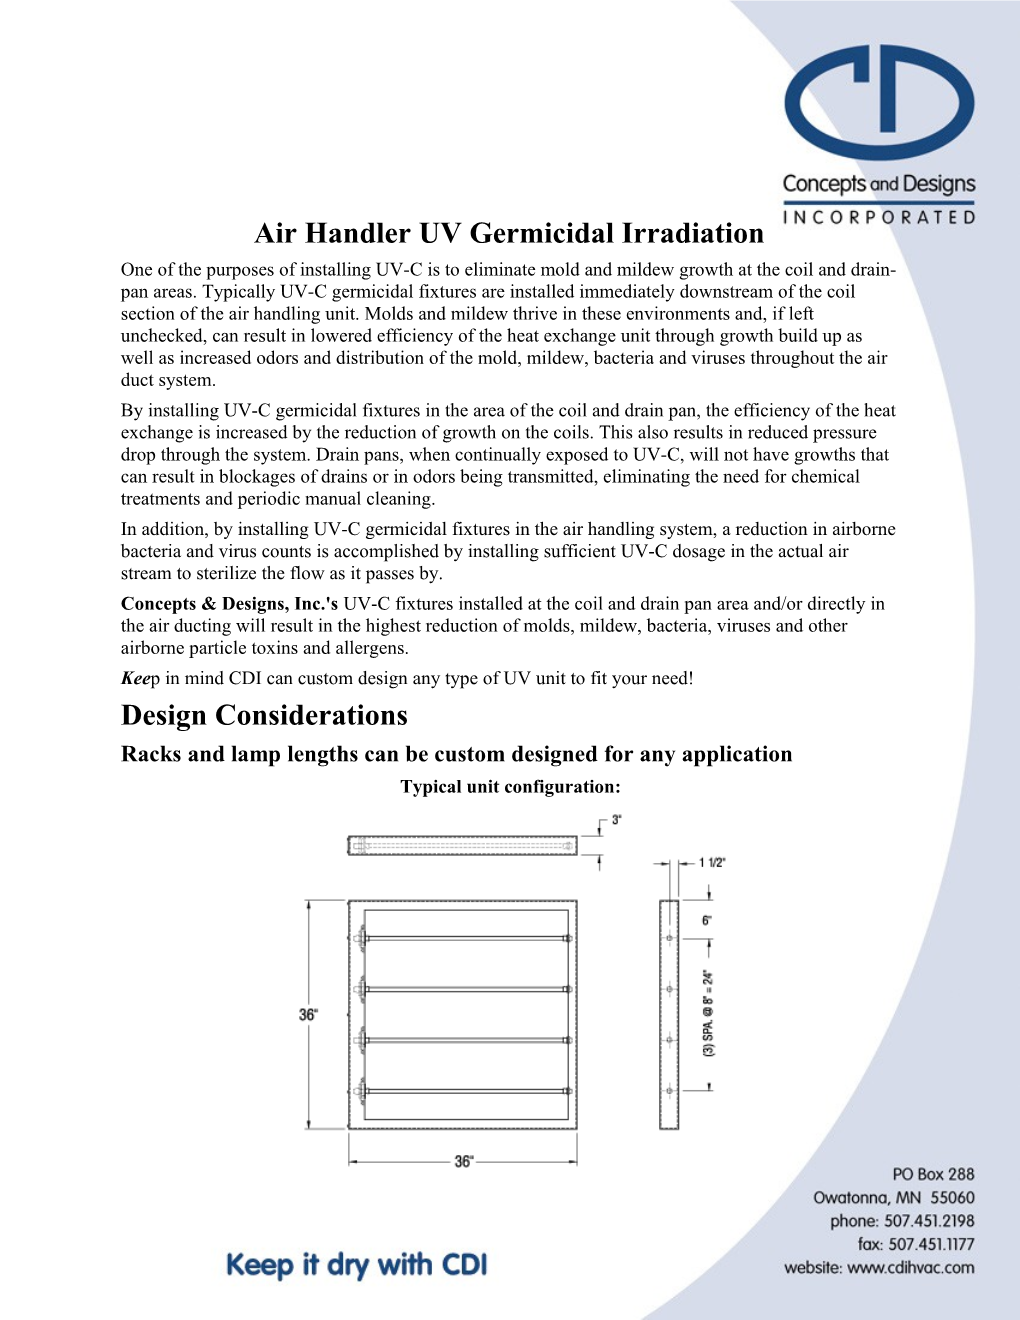 Air Handler UV Germicidal Irradiation